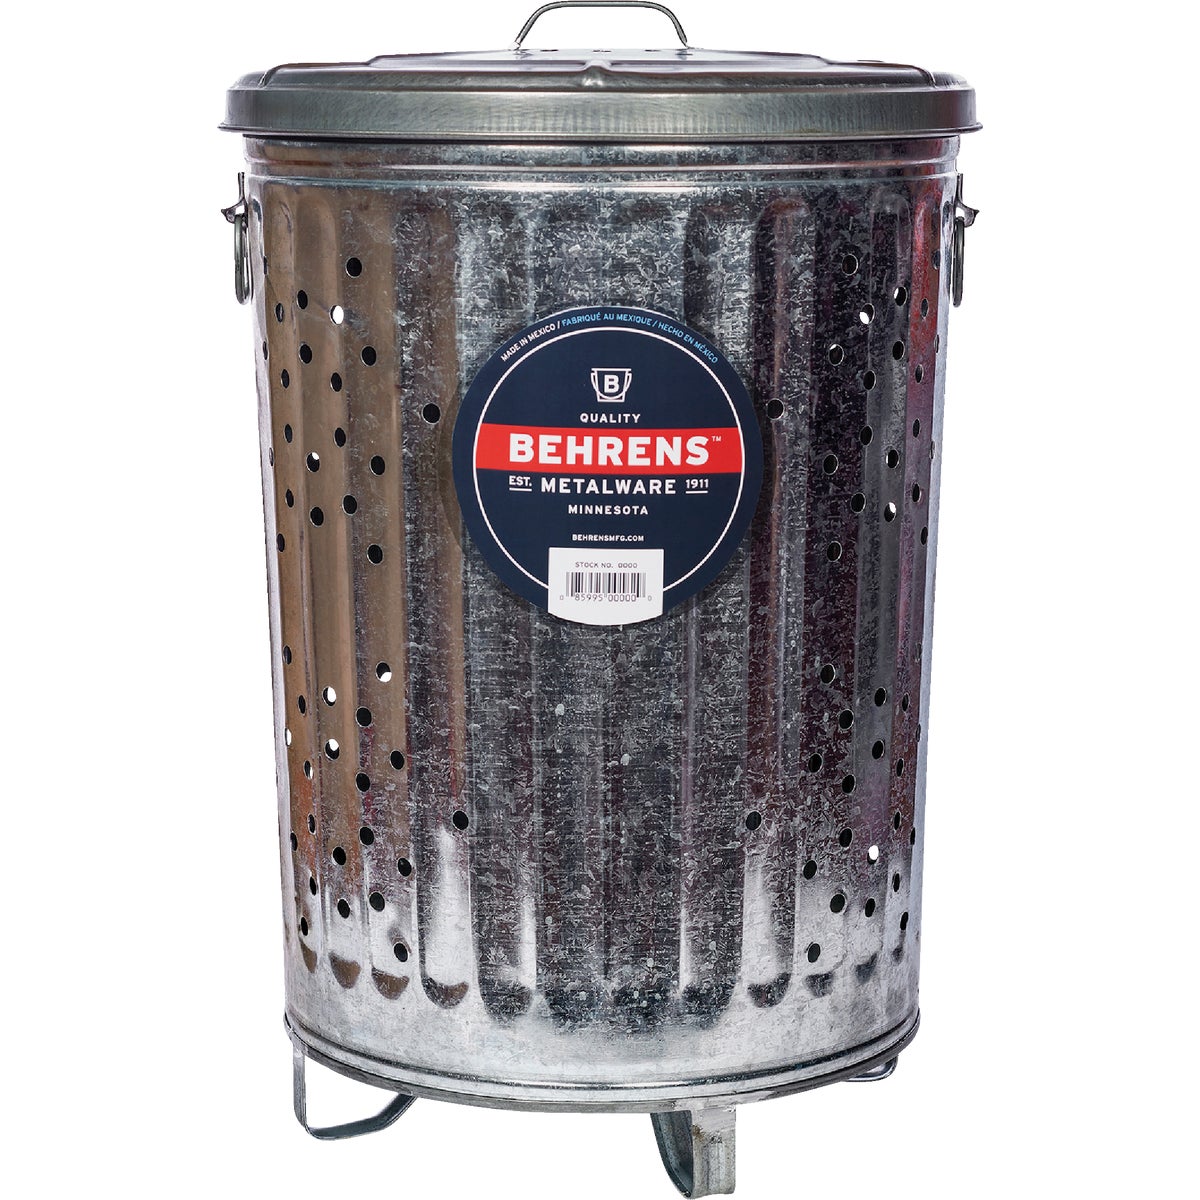 Item 625390, 20 gallon galvanized steel trash burner/composter with lid.